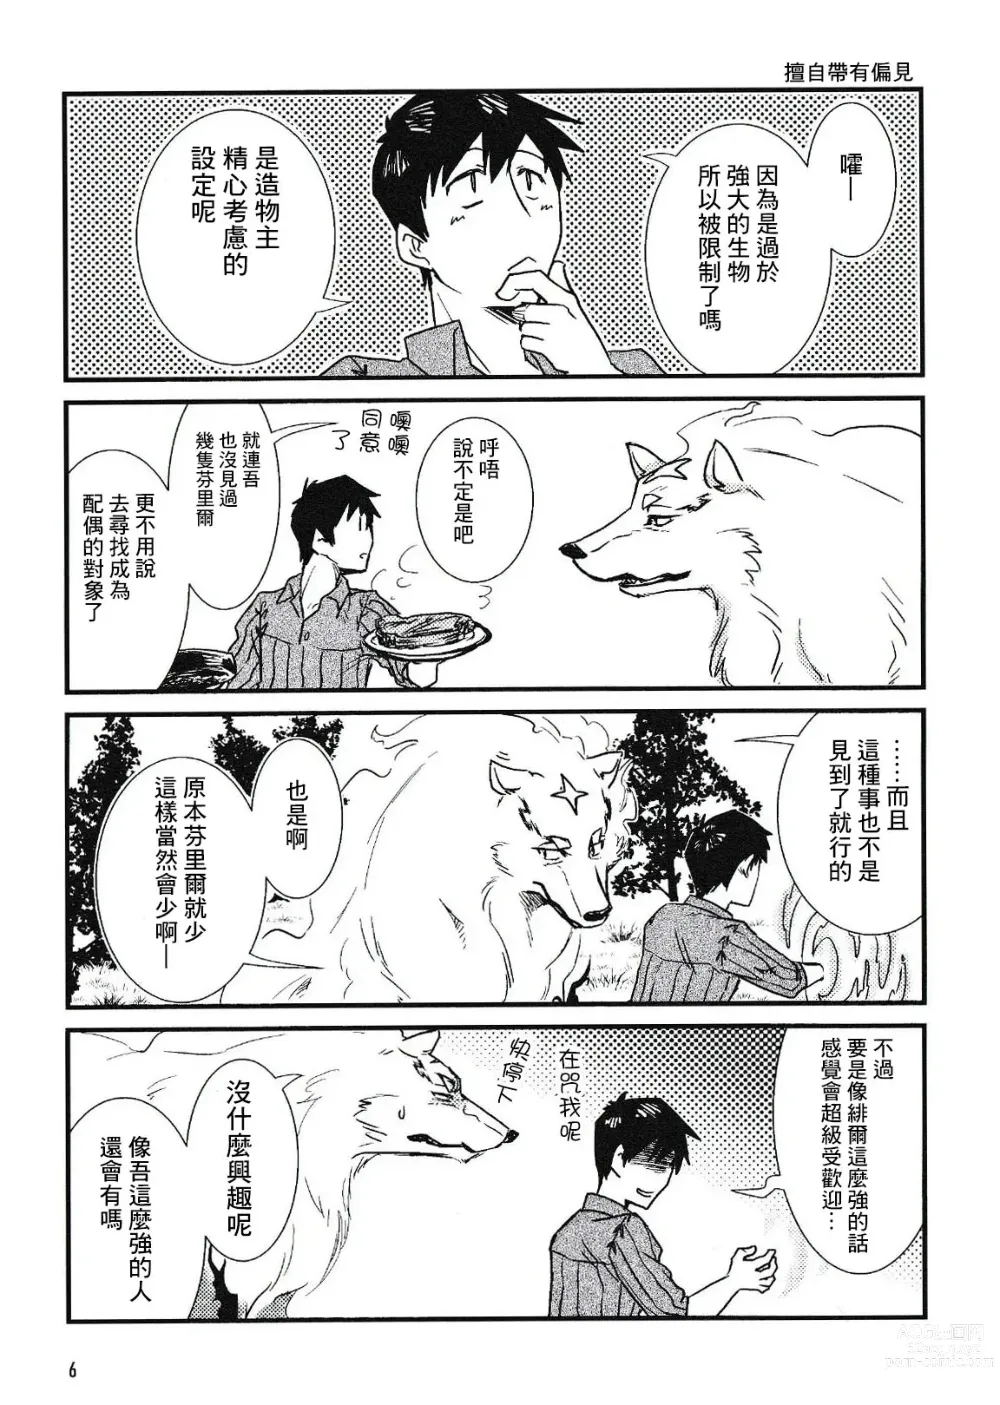 Page 6 of doujinshi NO WONDER!